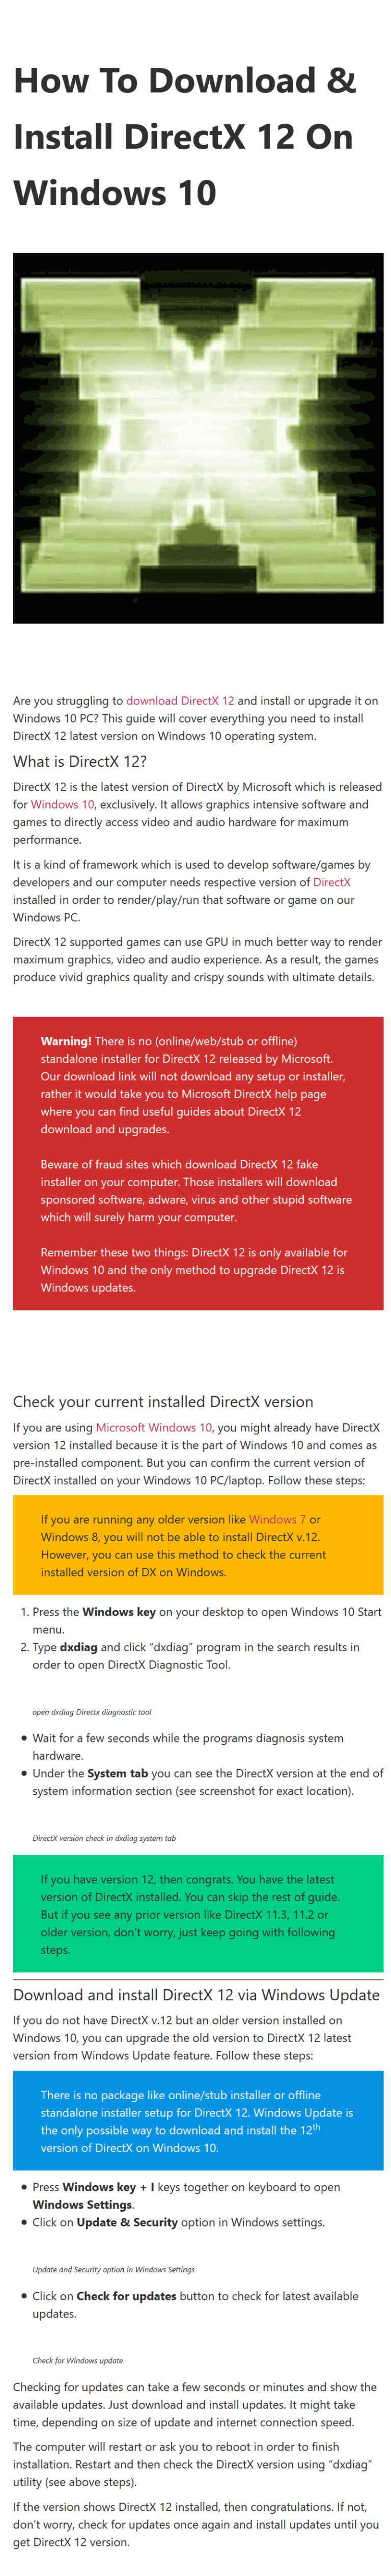 directx 9 windows 7 32 bit